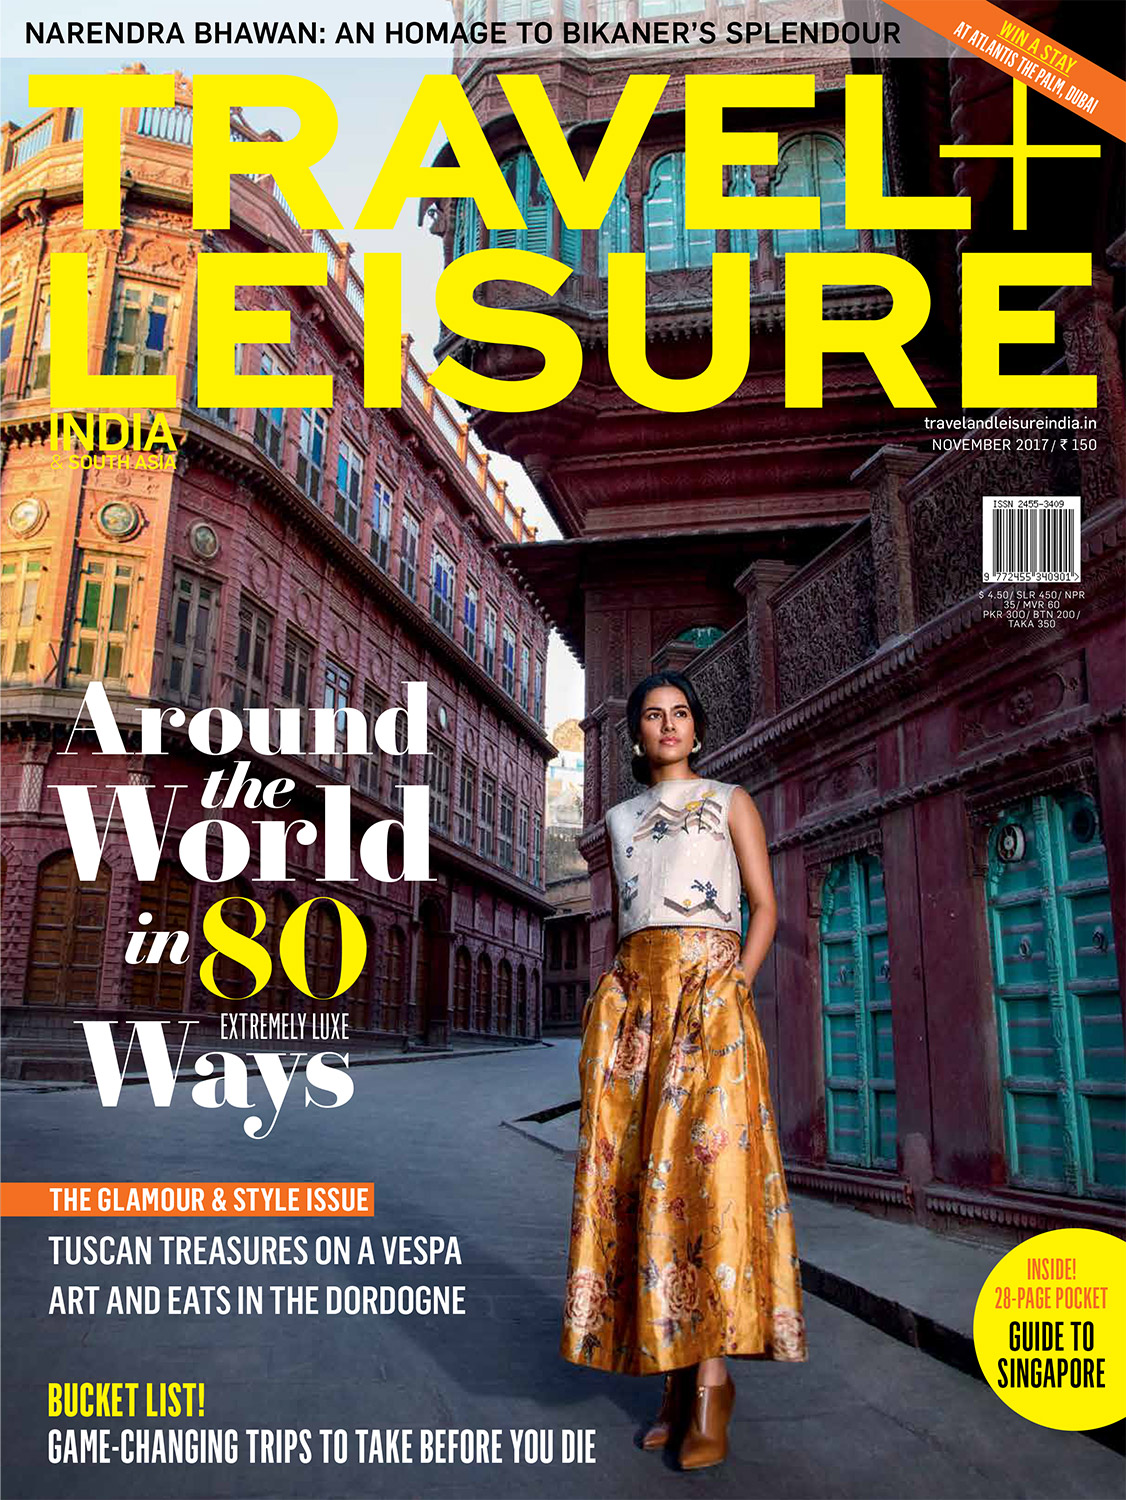 Travel+Leisure magazine